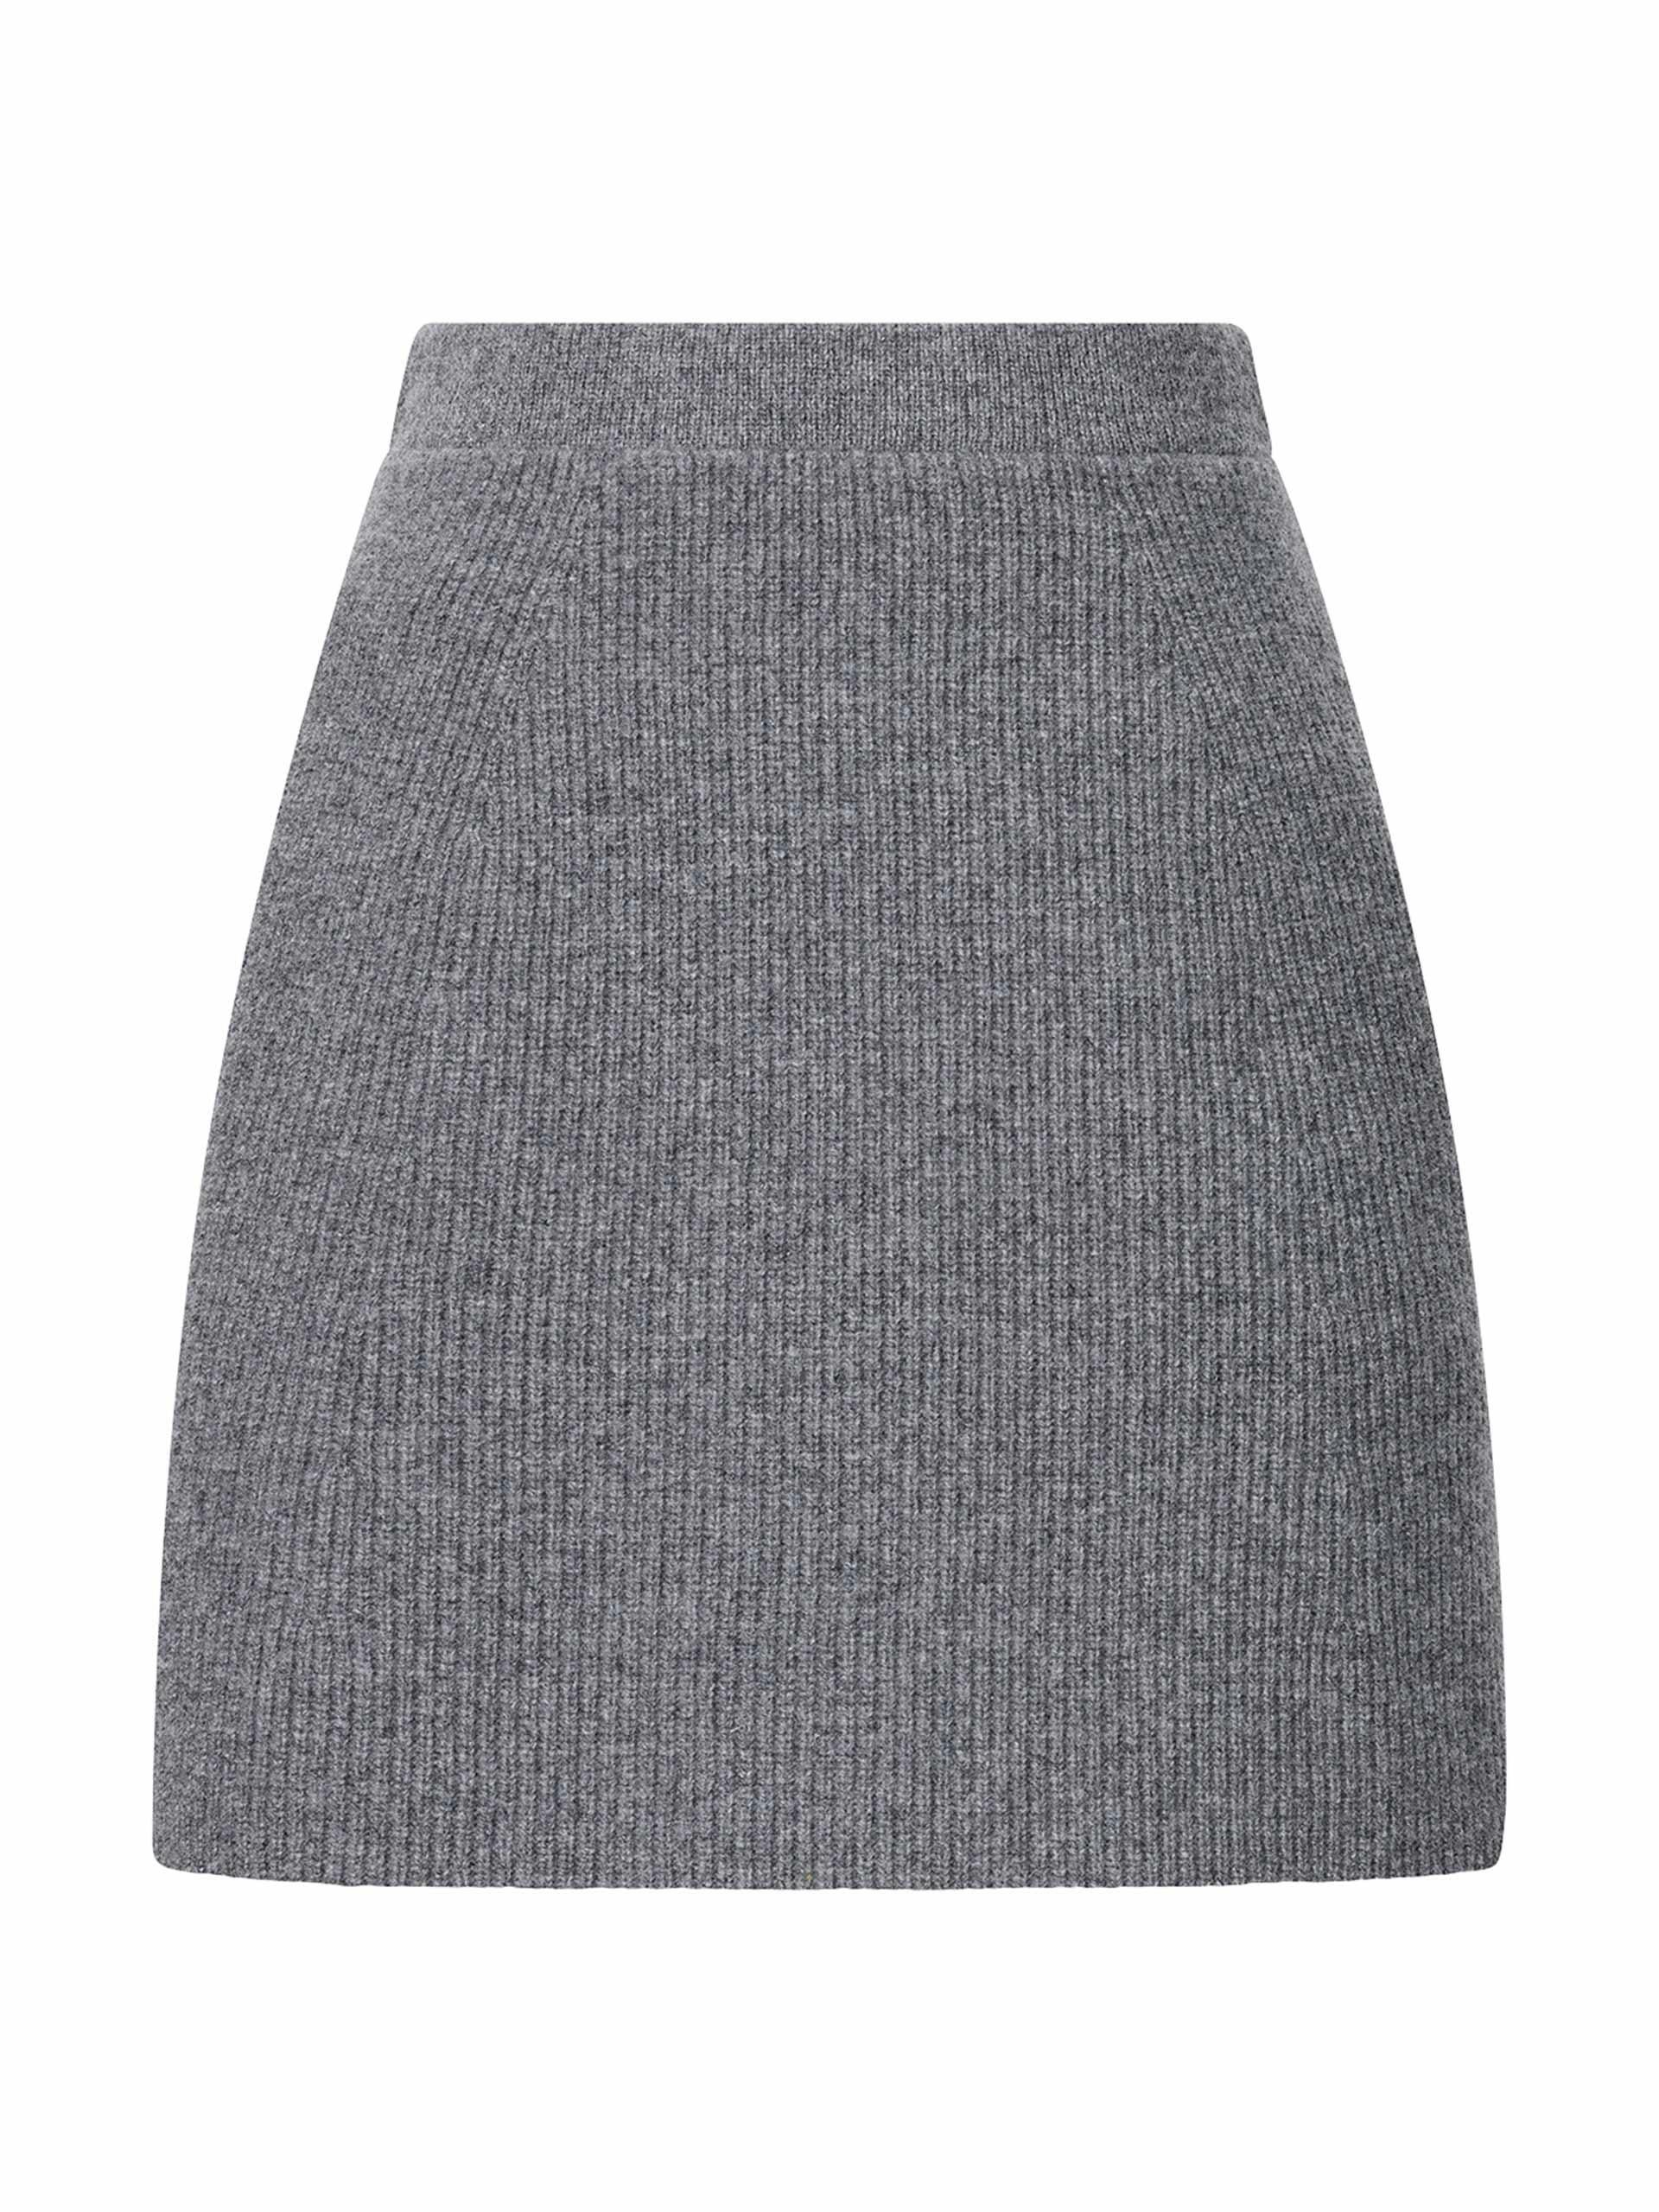 Grey lambswool mini skirt